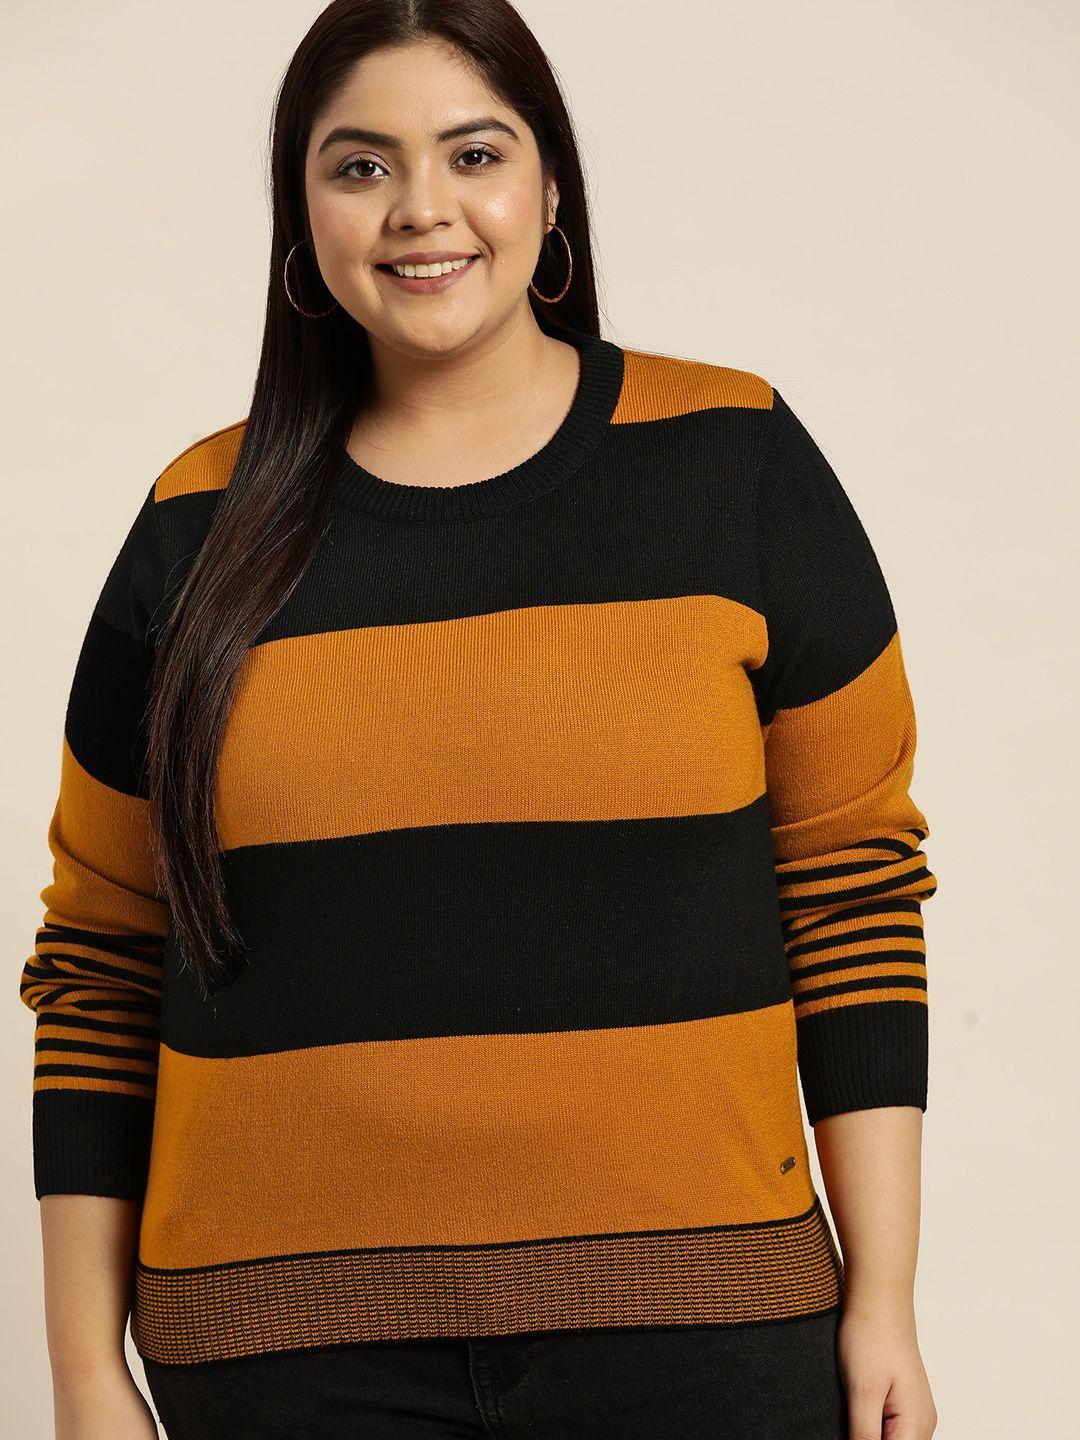 sztori women plus size mustard brown & black striped sweater